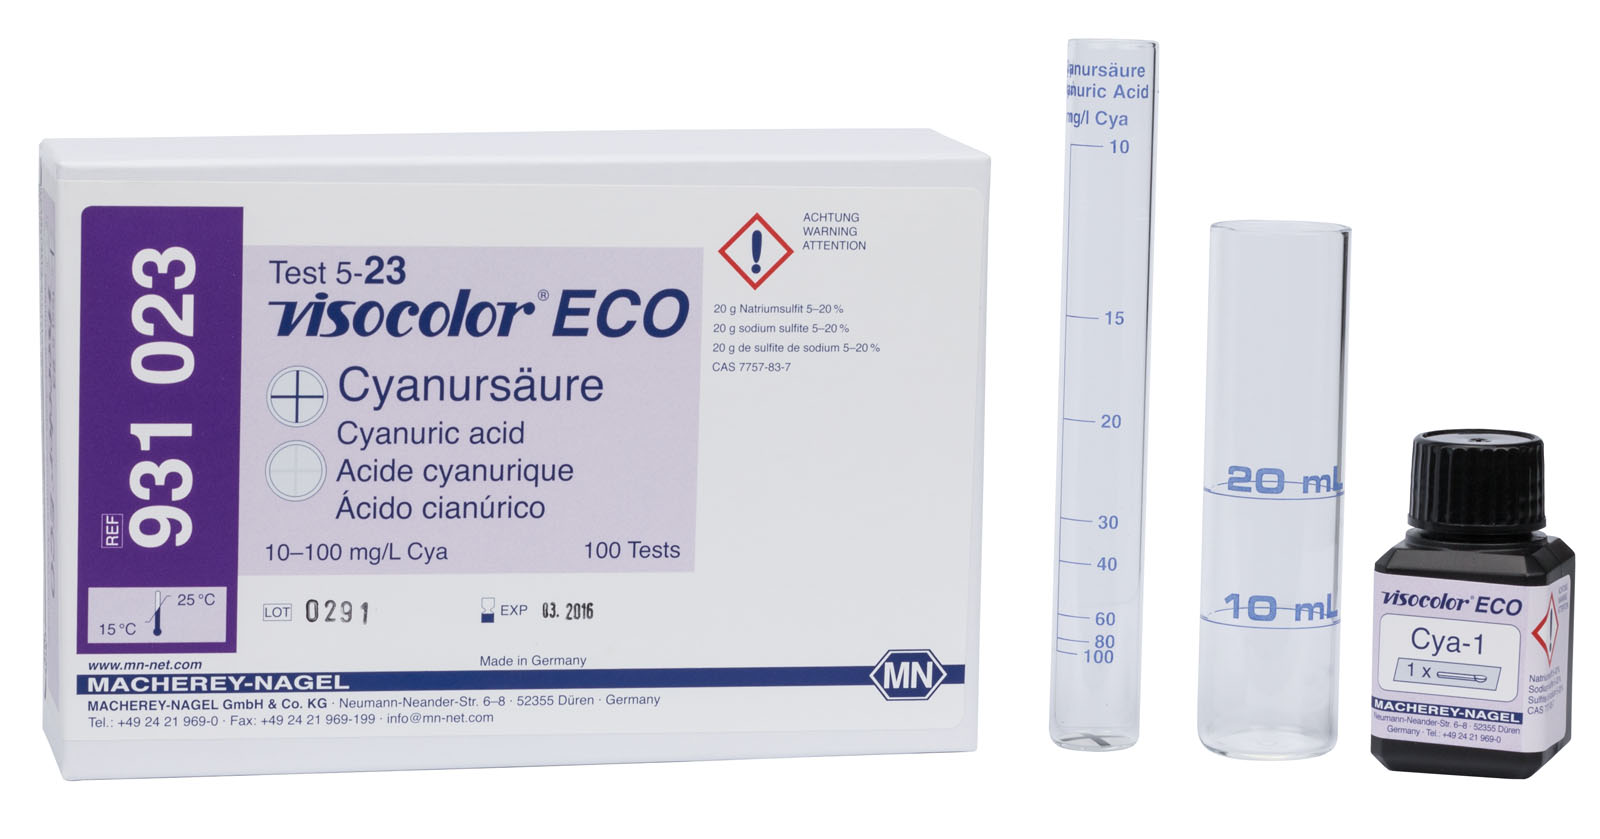 VISOCOLOR® ECO Cyanuric Acid Test Kit